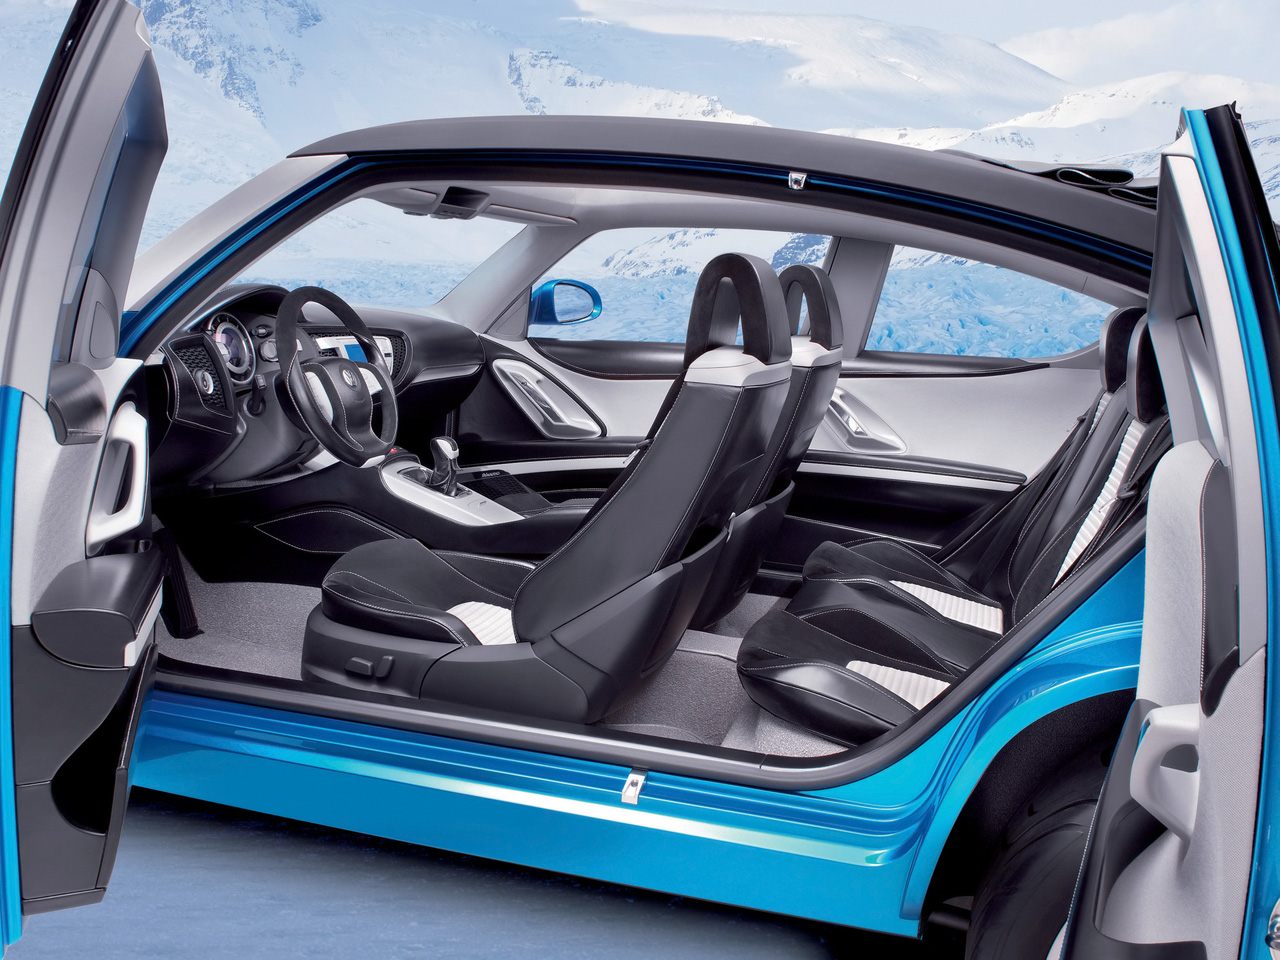 Volkswagen Concept A Backgrounds, Compatible - PC, Mobile, Gadgets| 1280x960 px